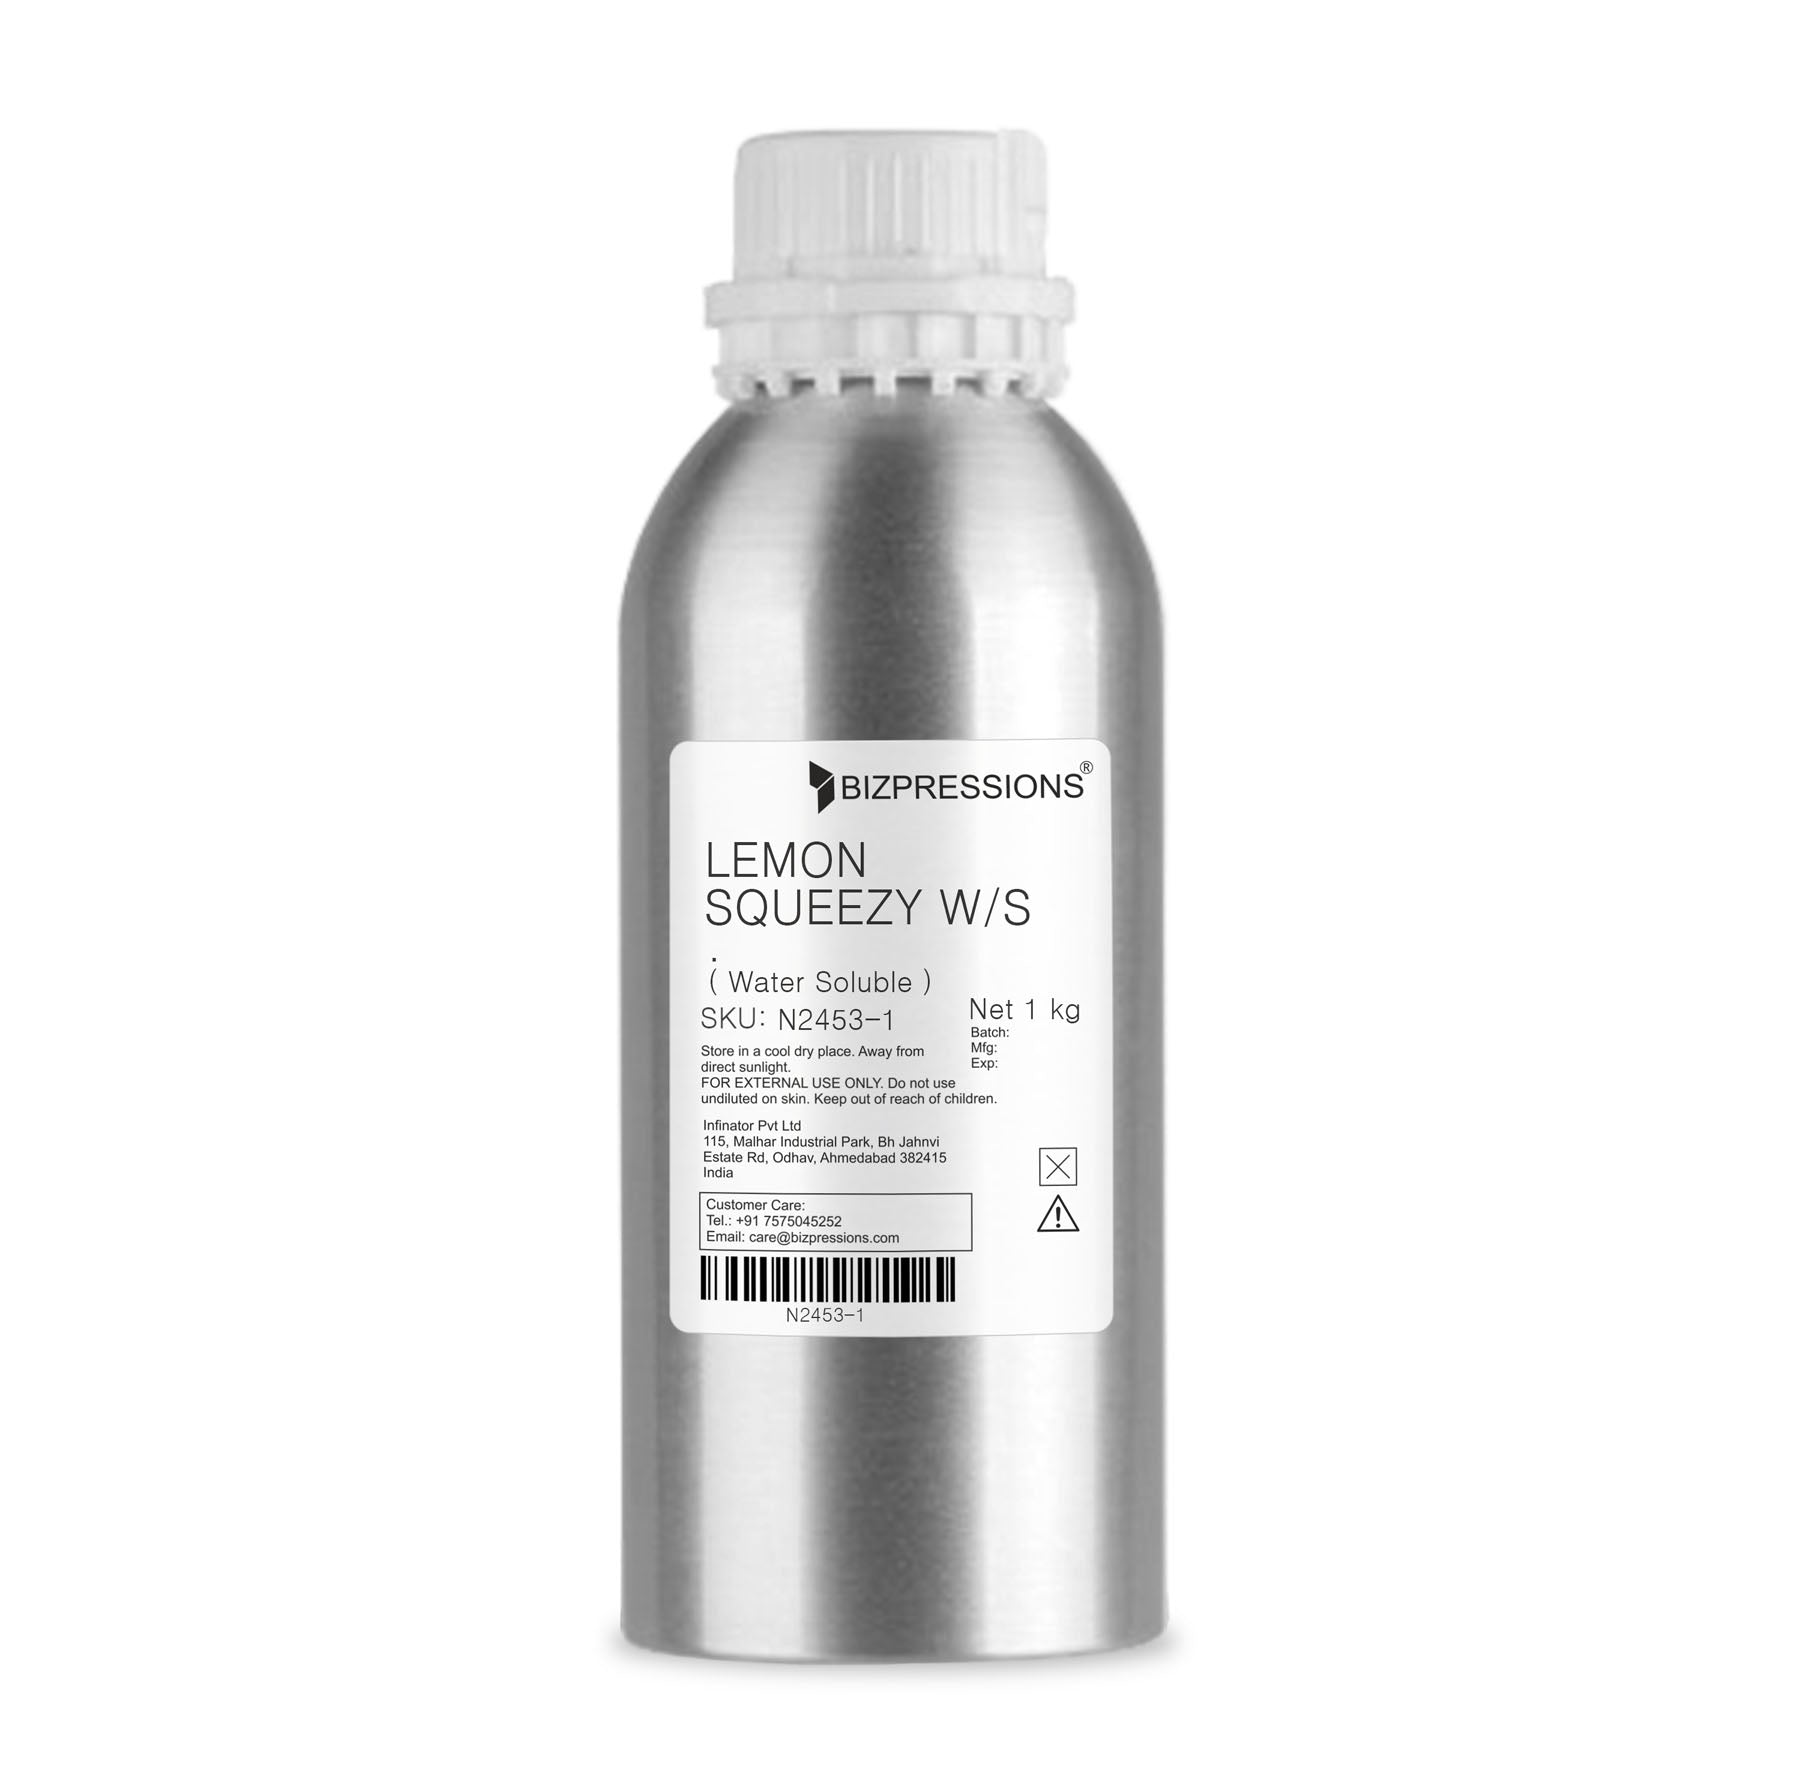 LEMON SQUEEZY W/S - Fragrance ( Water Soluble ) - 1 kg